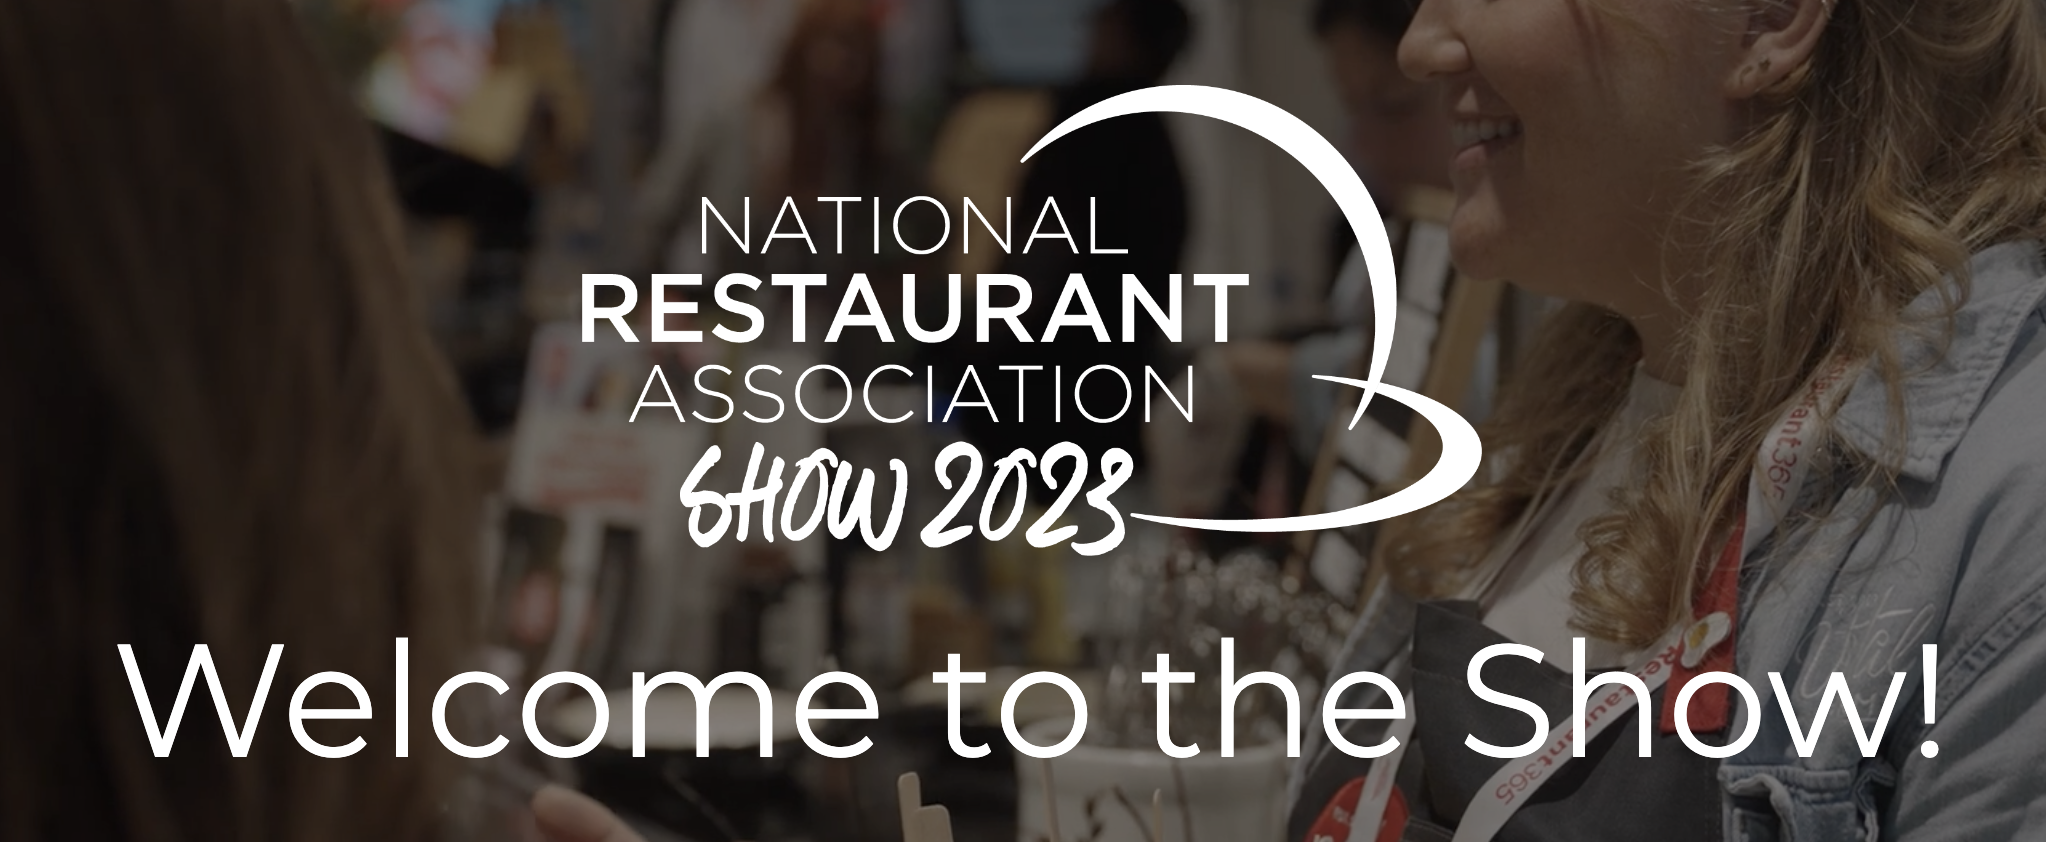 National Restaurant Association Show 2023 National Restaurant 